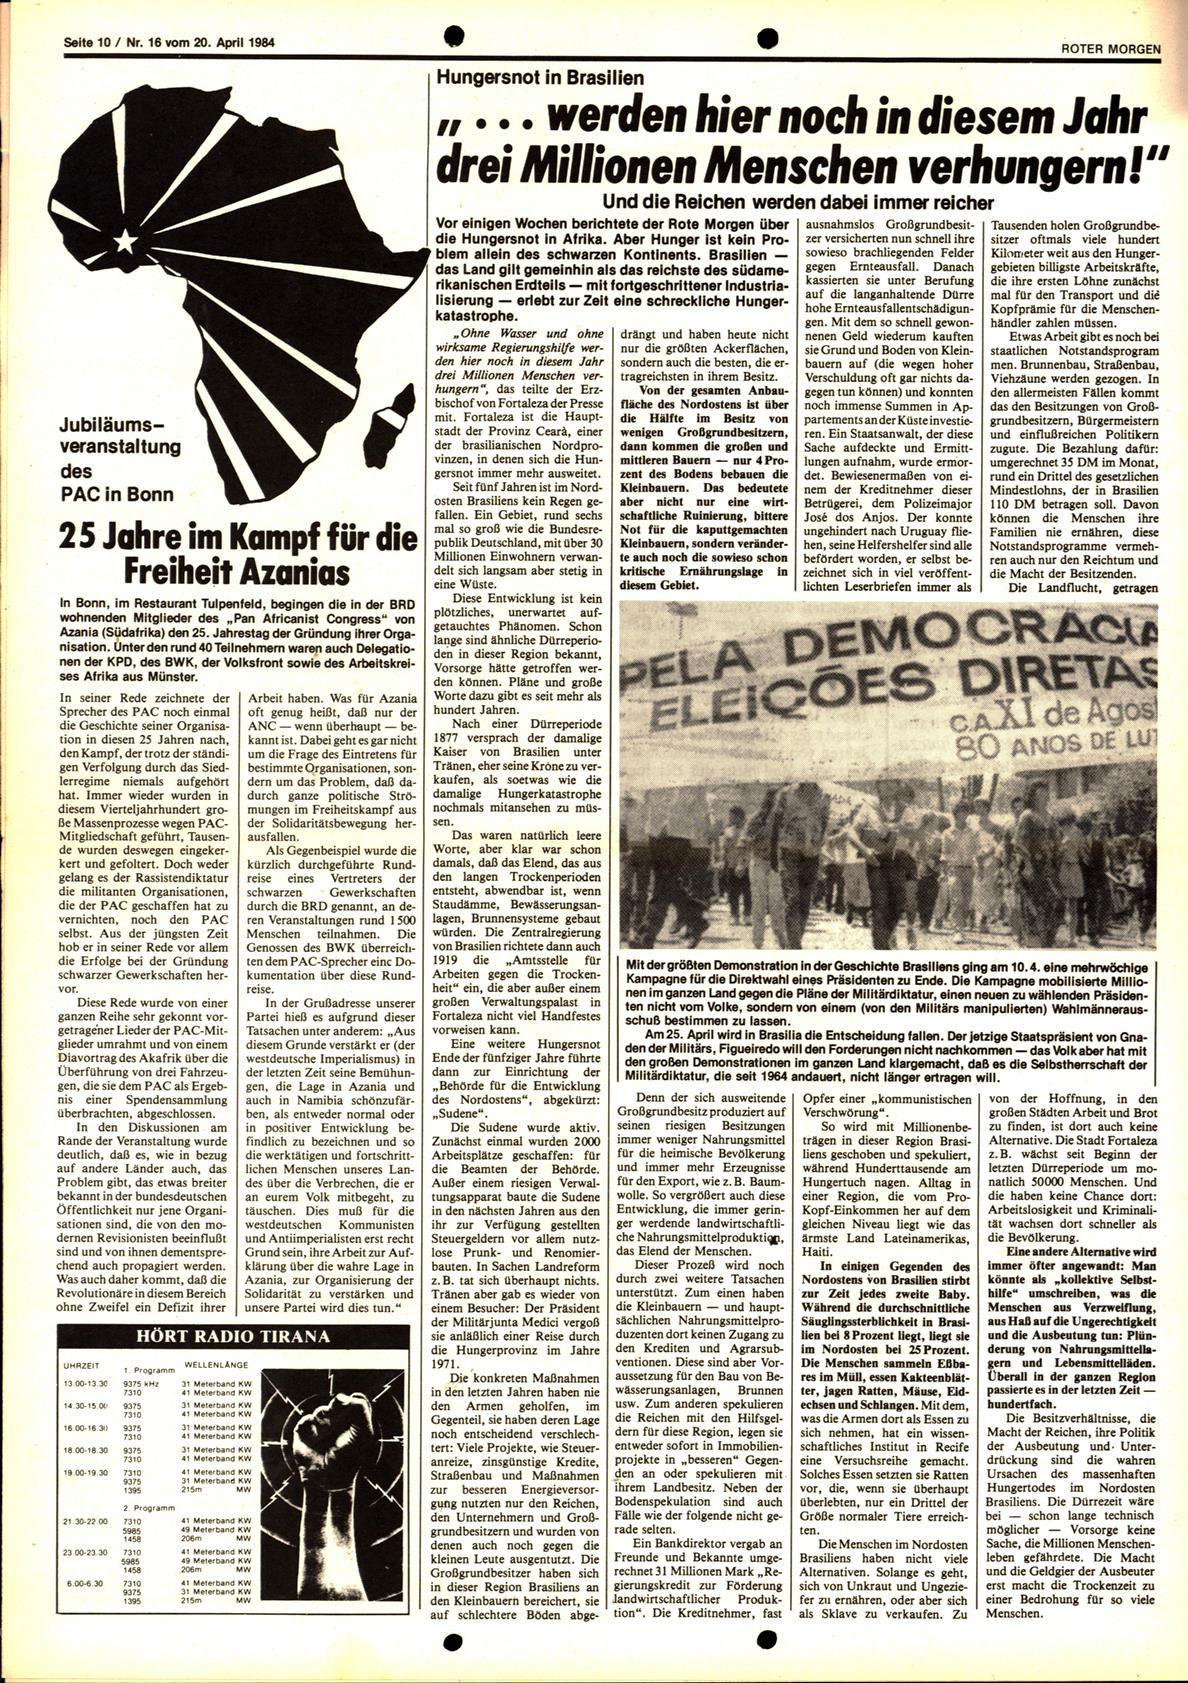 Roter Morgen, 18. Jg., 20. April 1984, Nr. 16, Seite 10